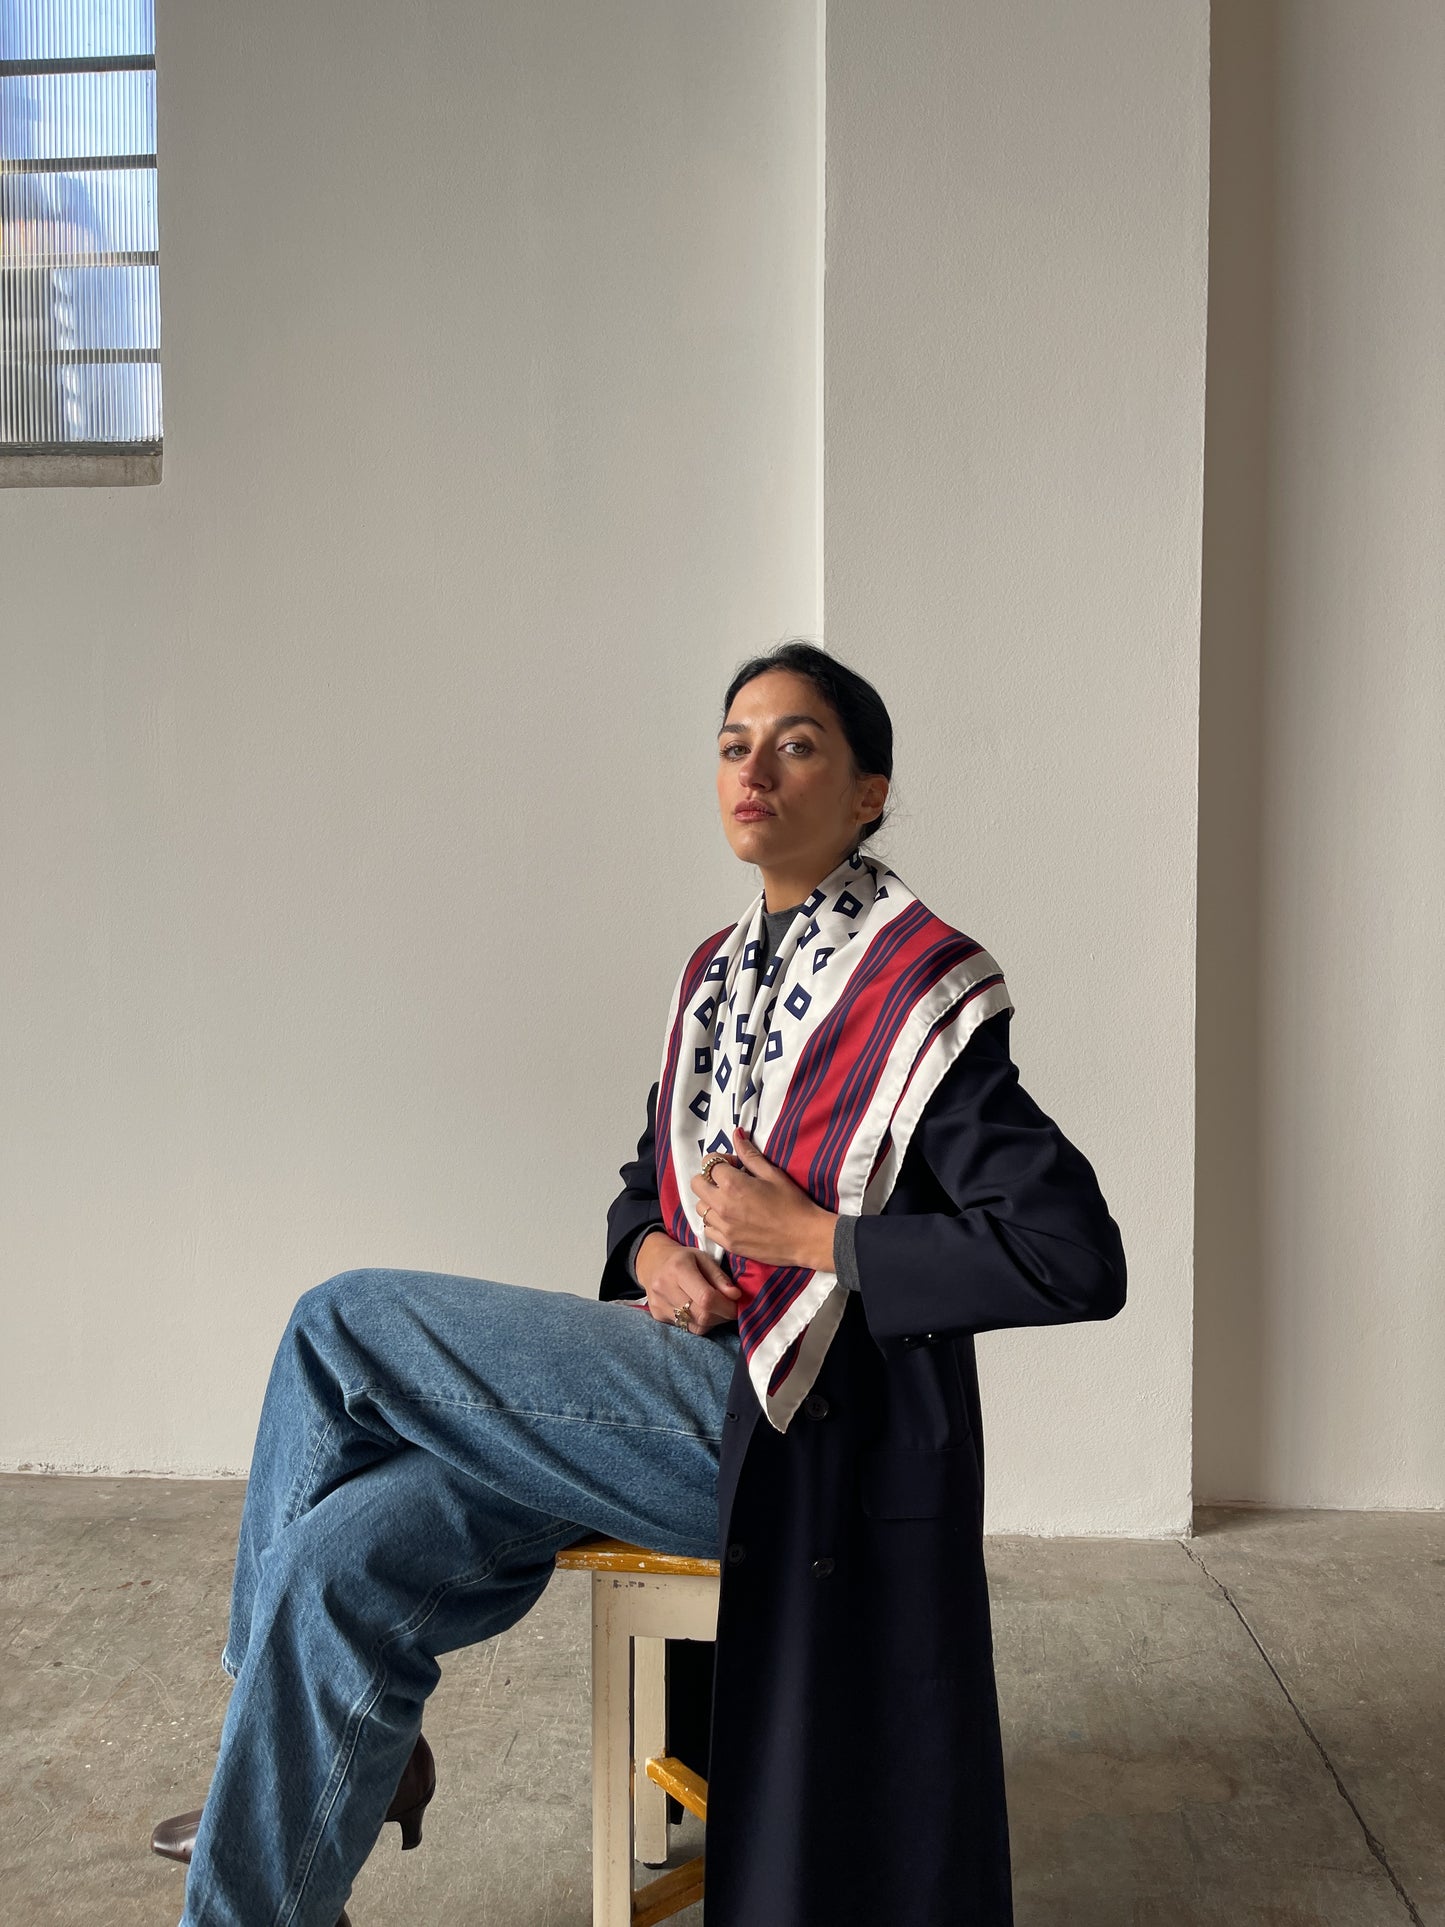 Yves Saint Laurent silk foulard